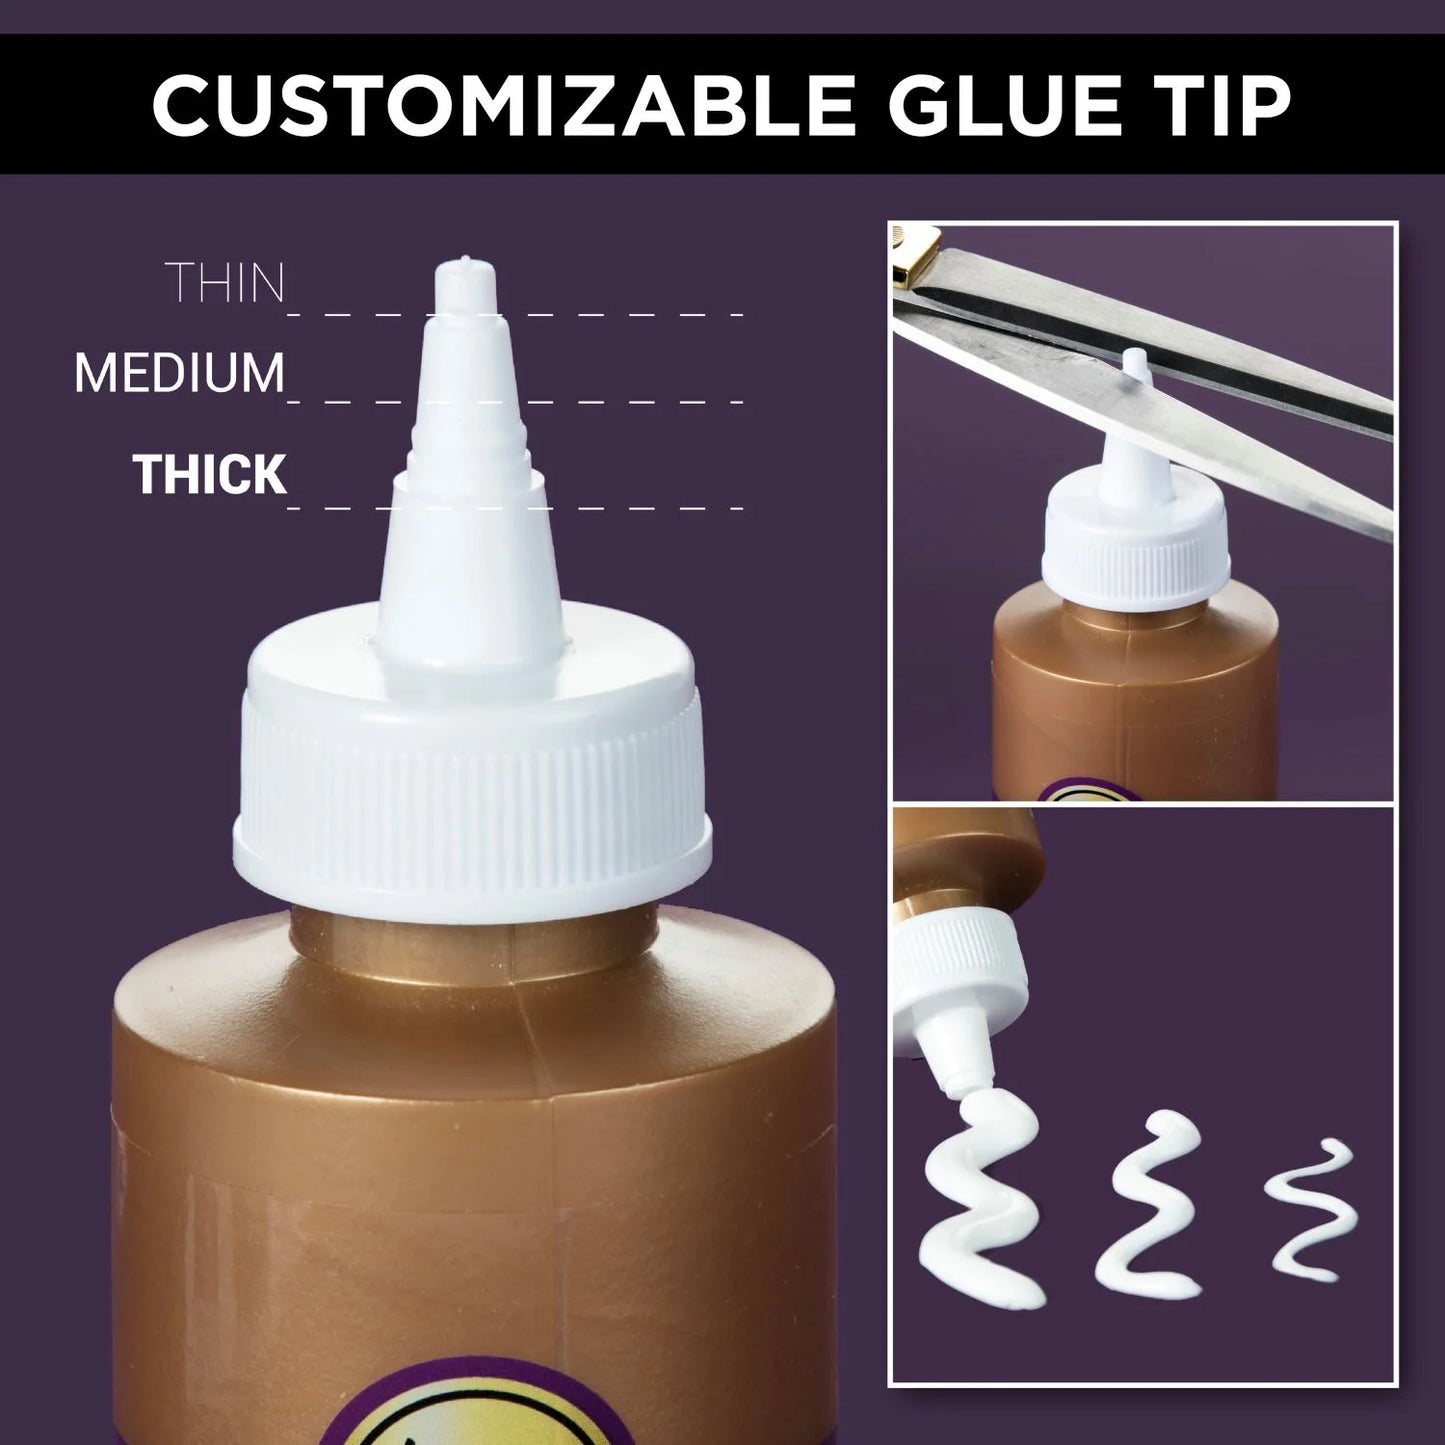 Tacky Glue Turbo 118 ml (4oz.)